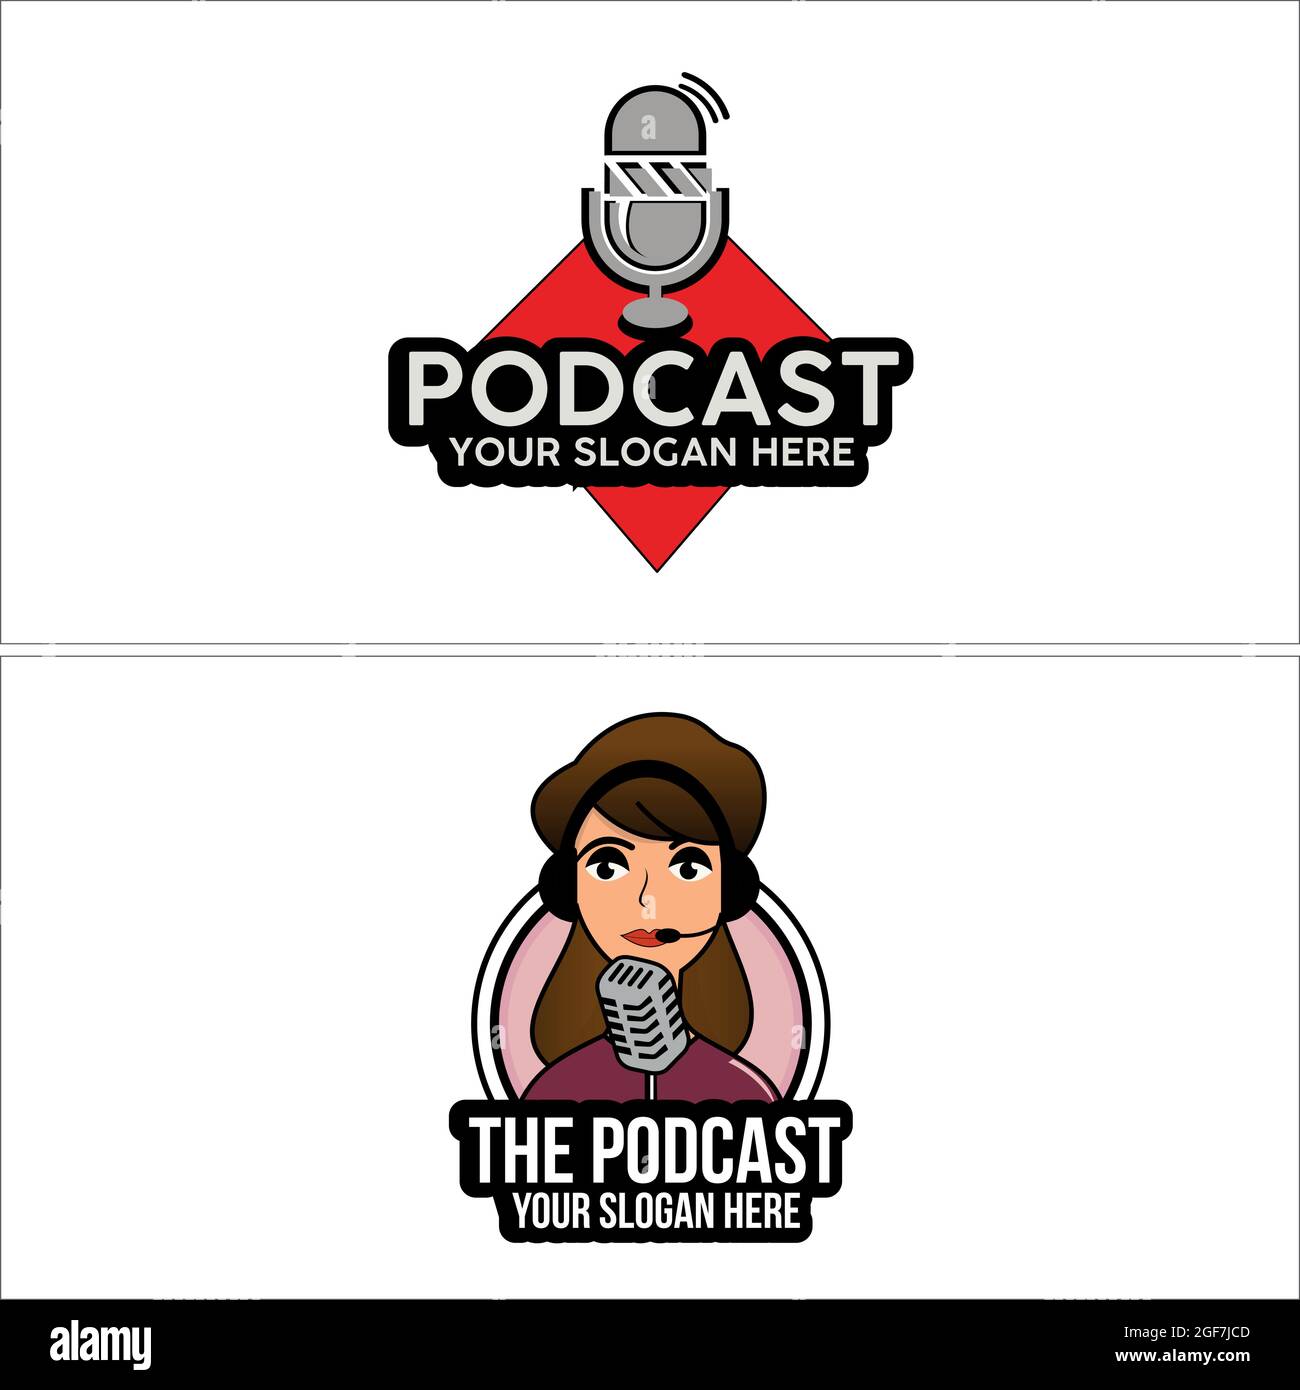 Entertainment arts podcast logo design Stock Vector